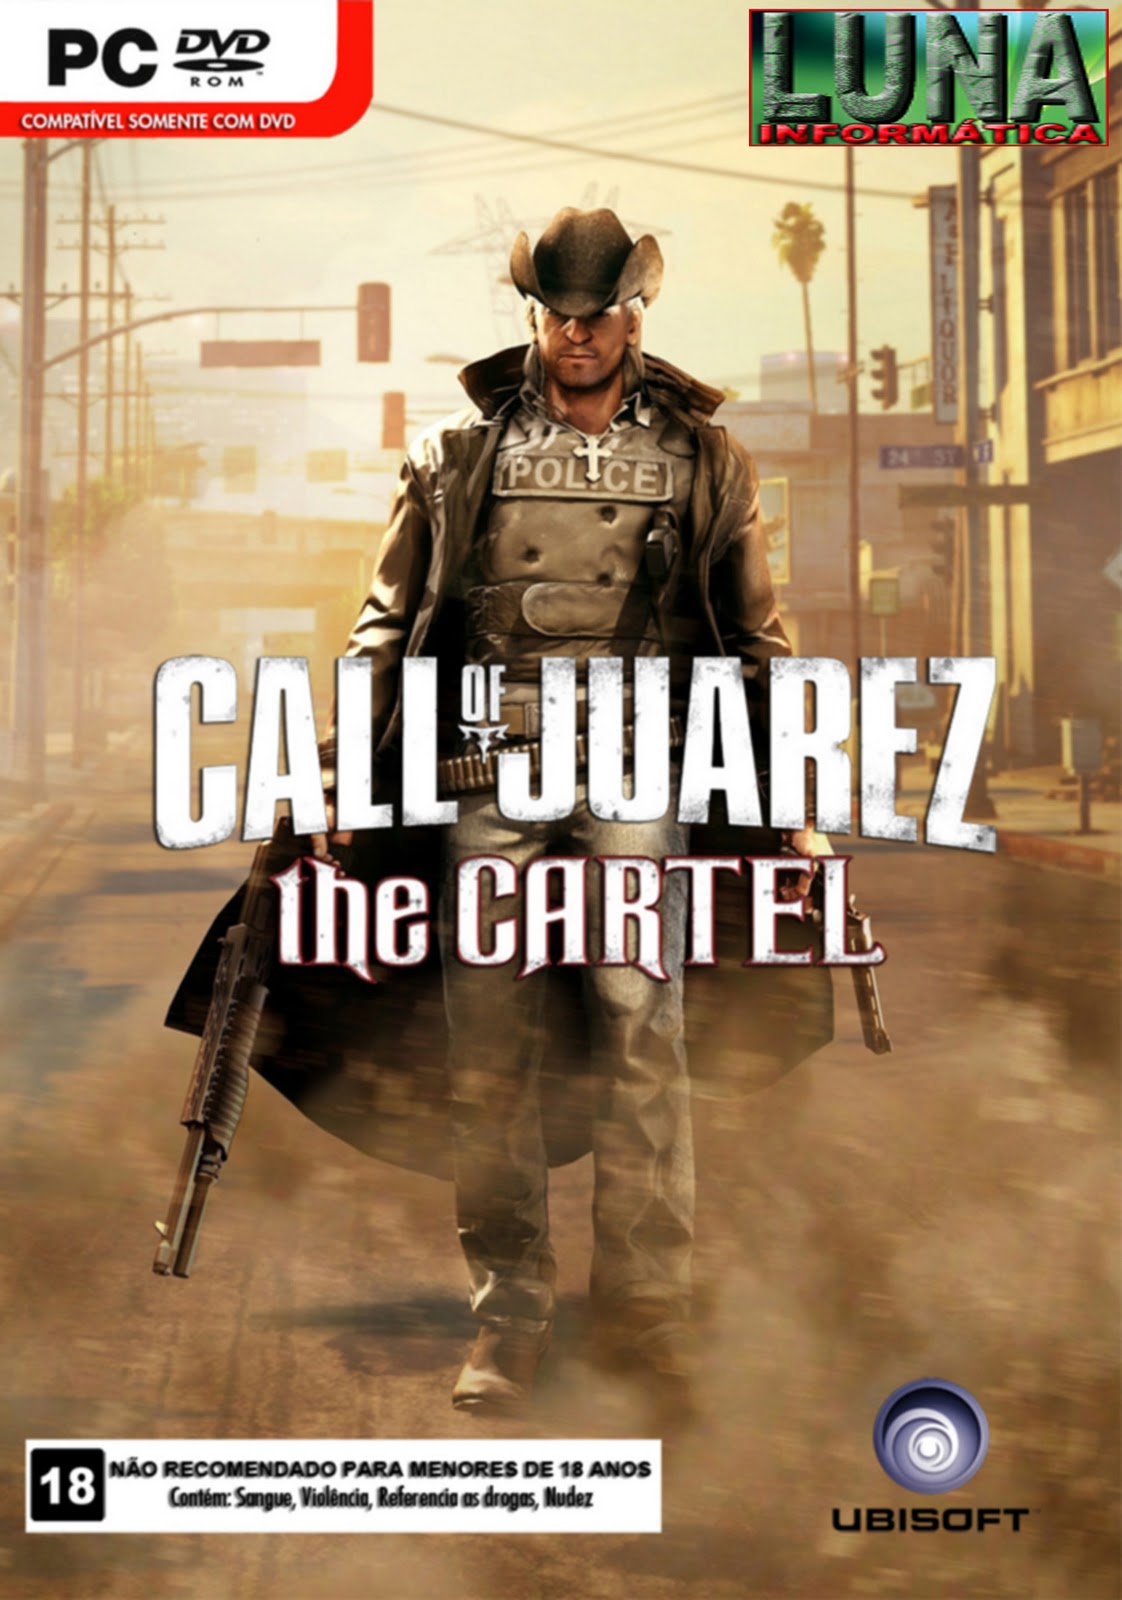 Call of juarez the cartel стим фото 90